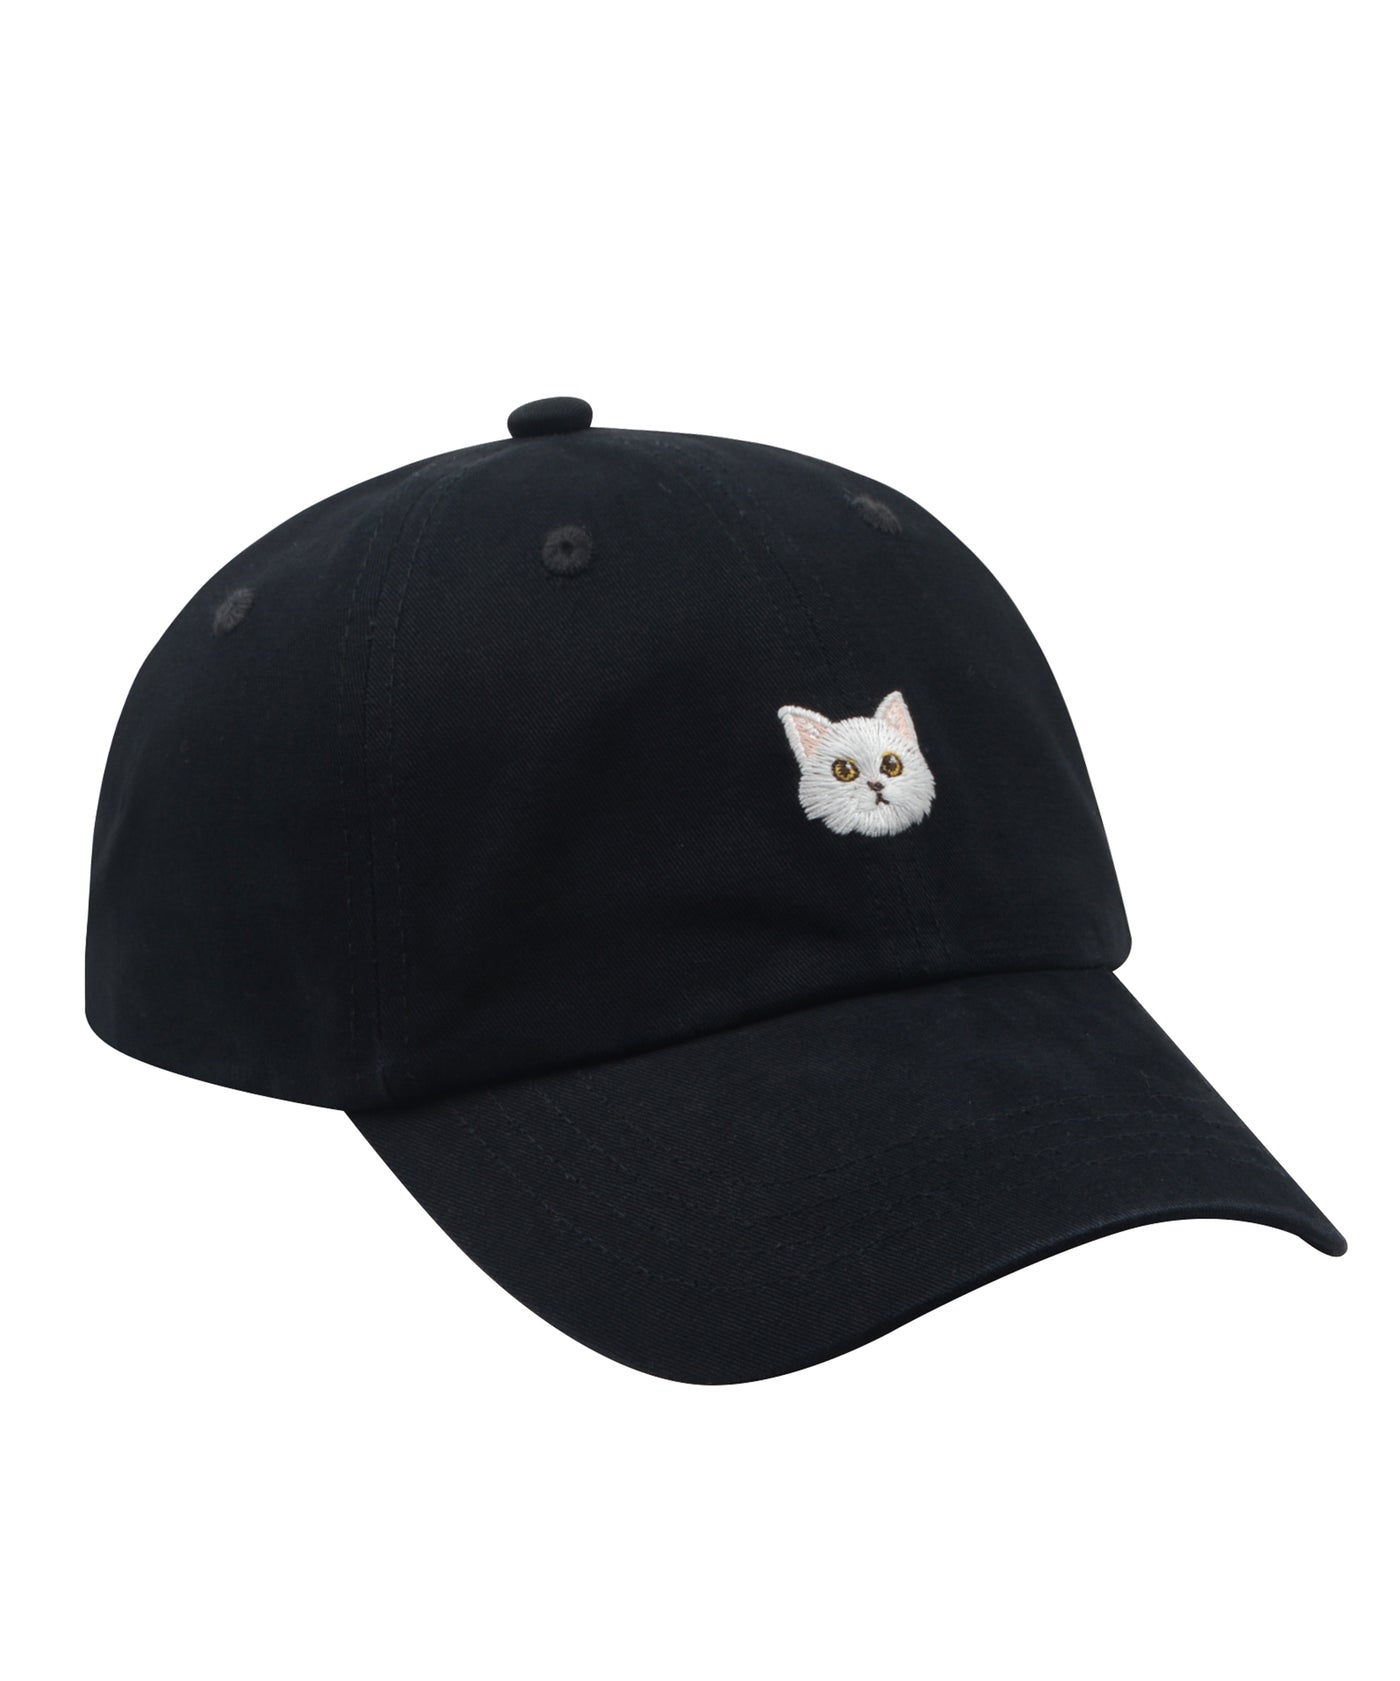 Hatphile White Cat Soft Baseball Cap